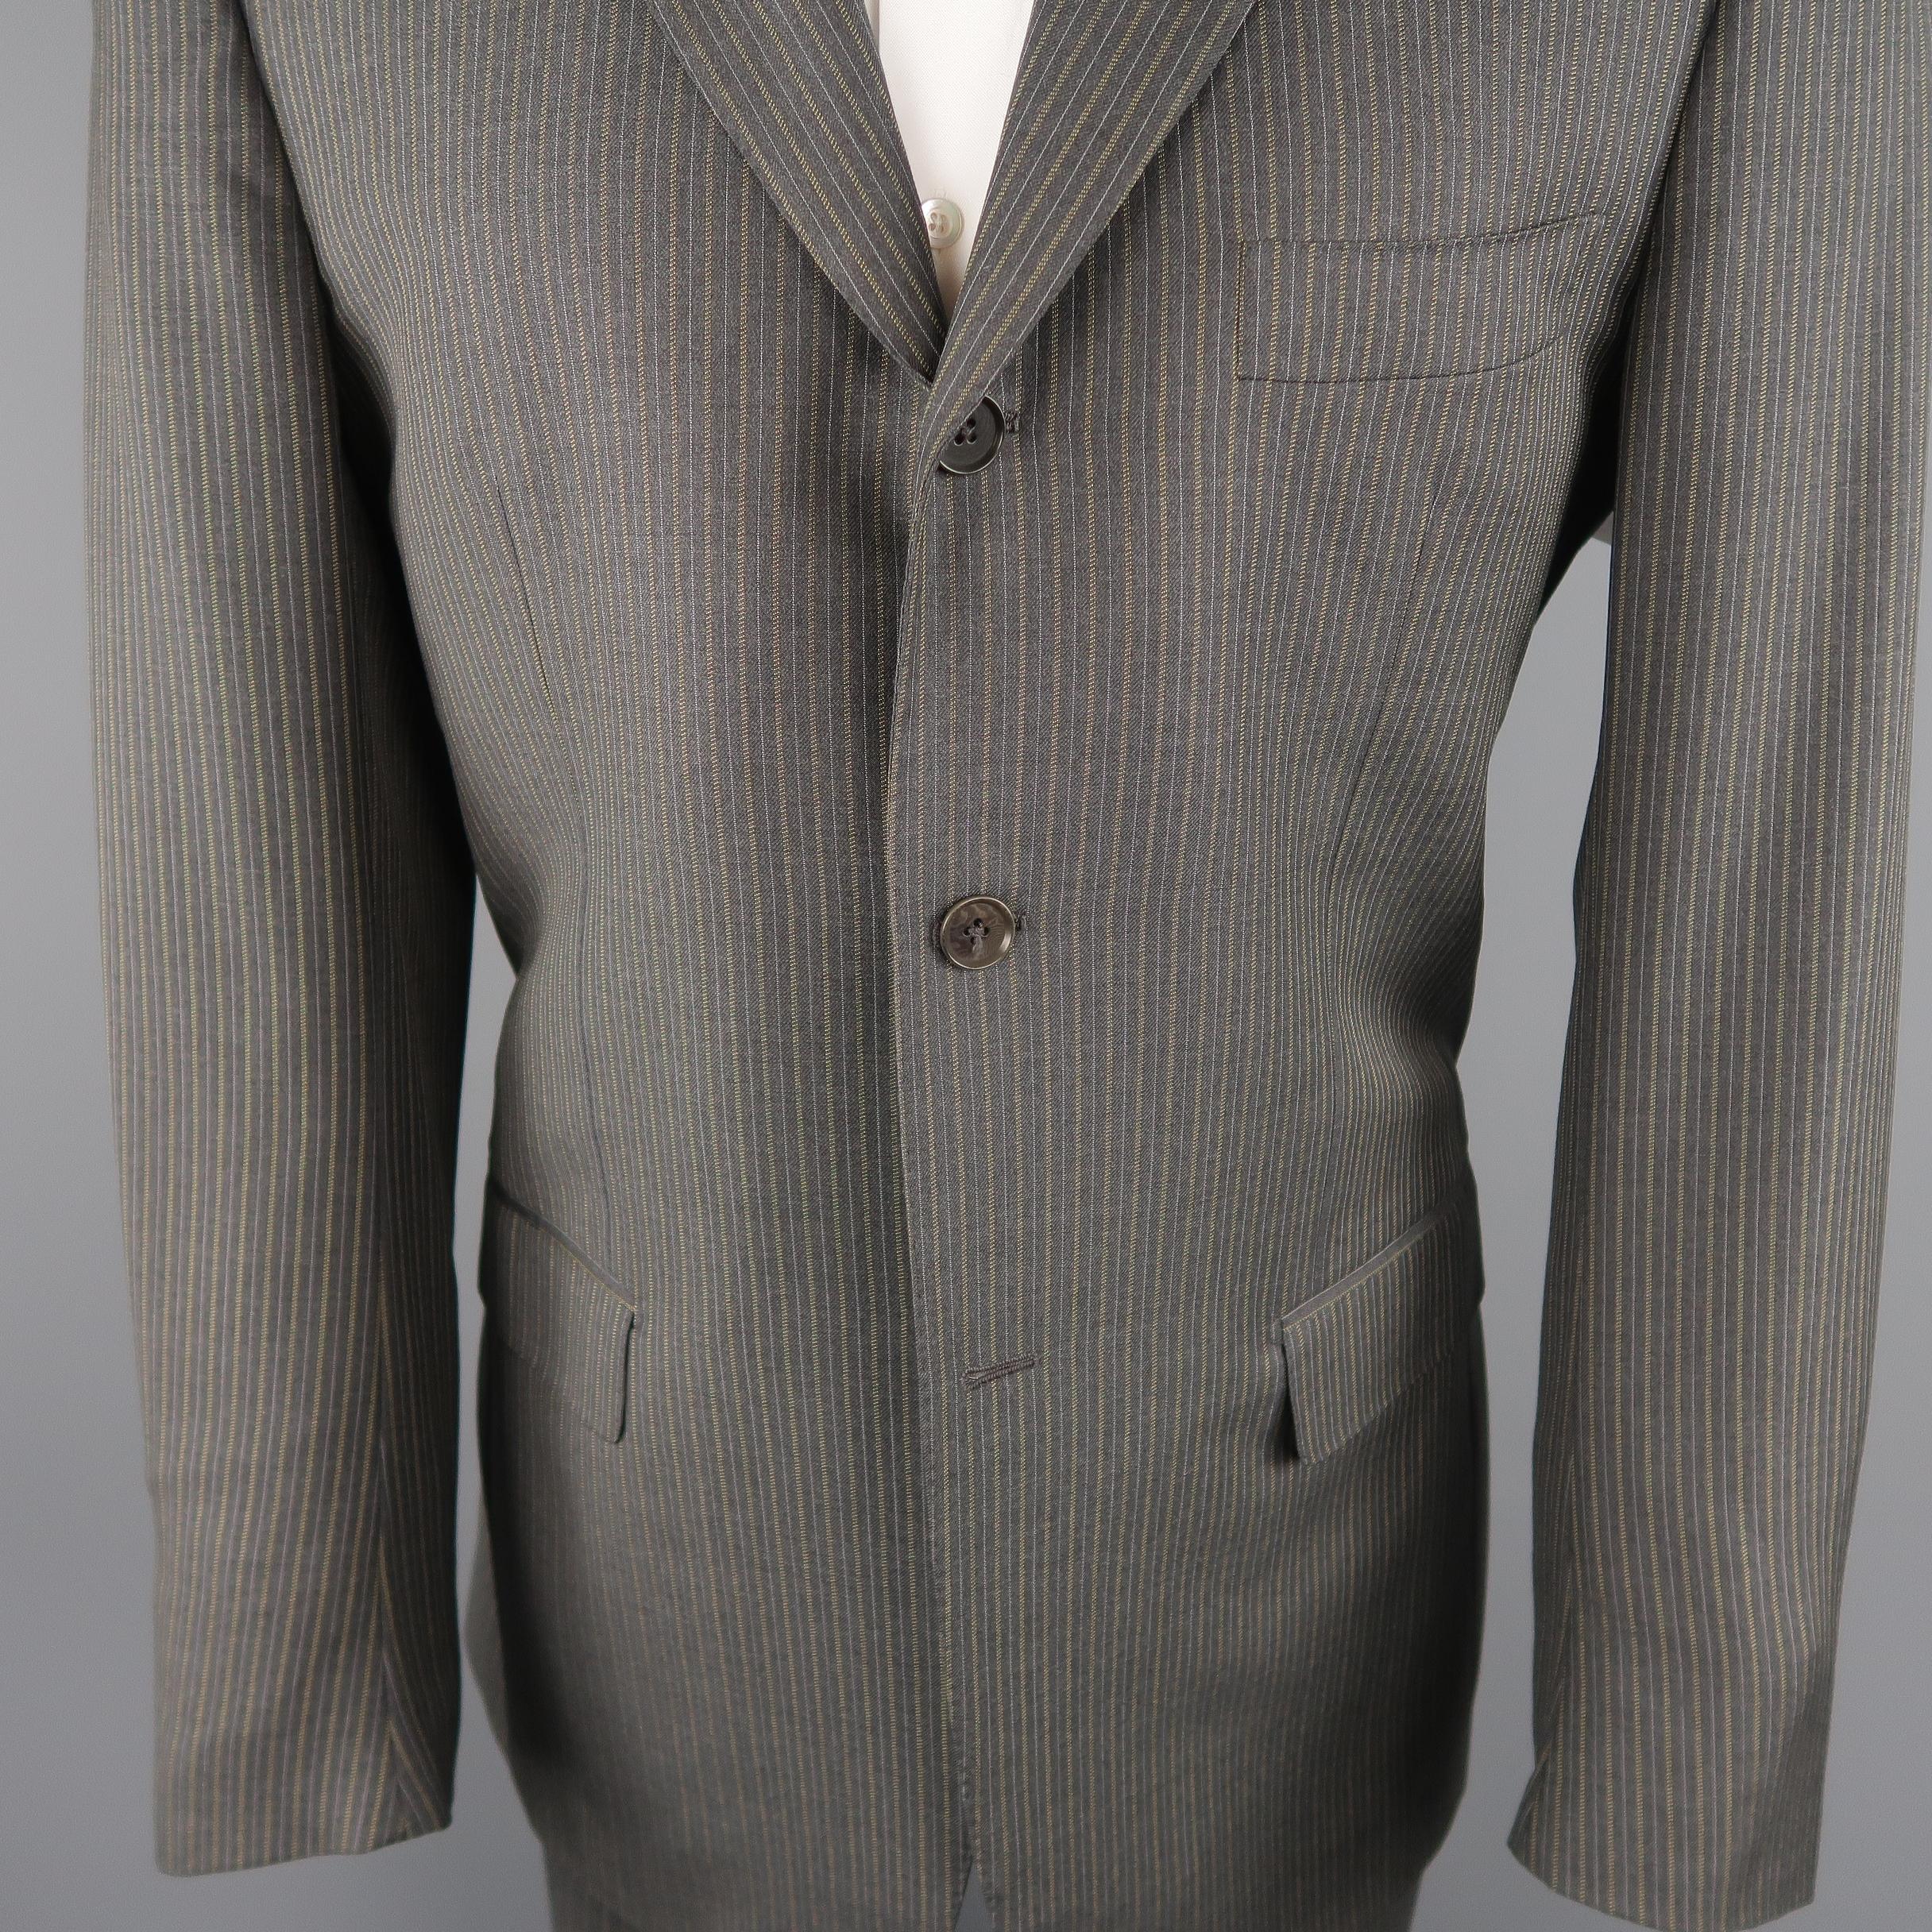 Black ISAIA 42 Regular Gray & Gold Pintripe Wool 3 Button Notch Lapel Suit